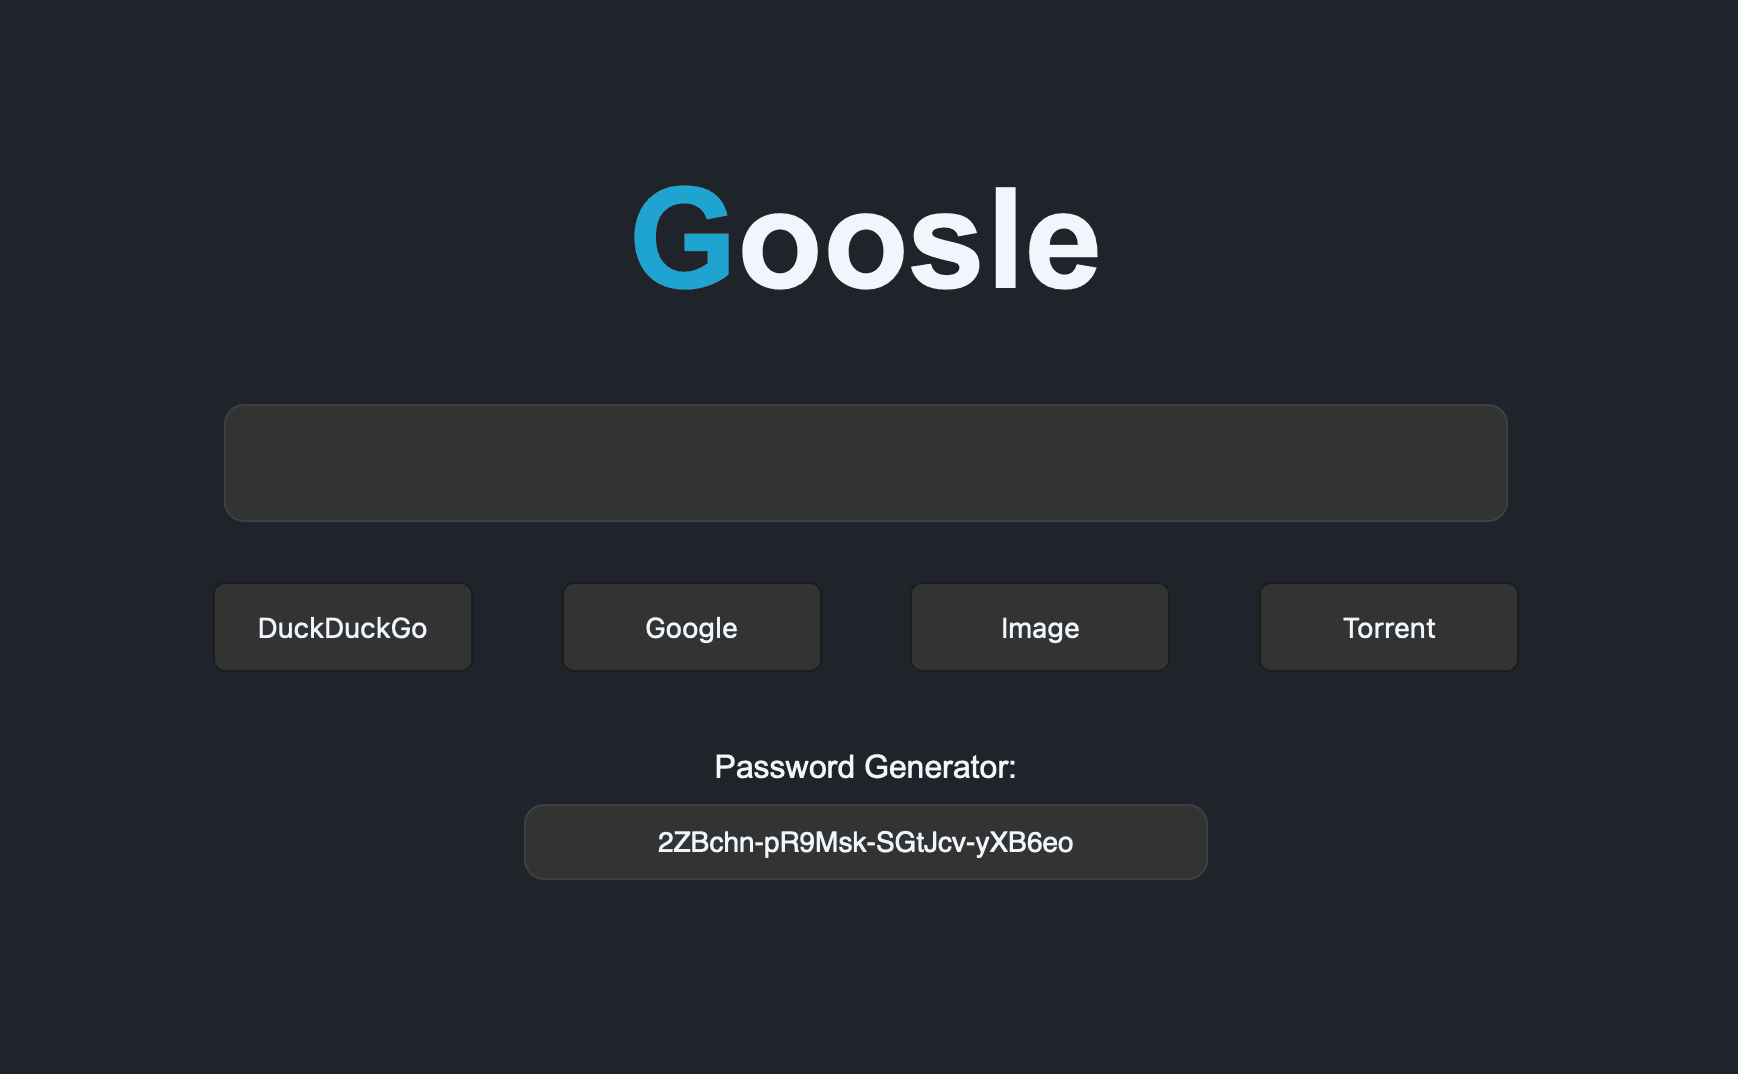 Goosle main interface